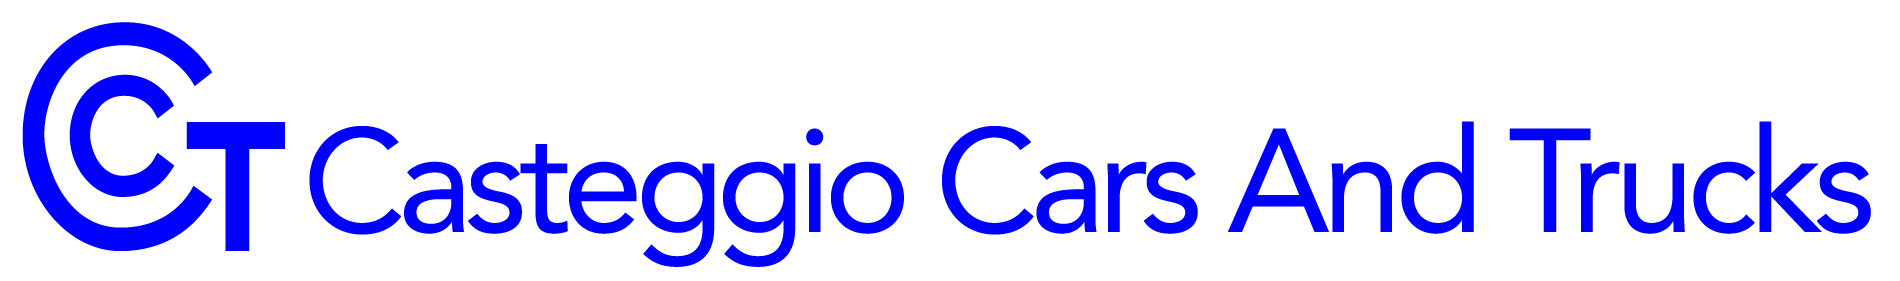 Cct-Casteggio Cars And Trucks S.R.L.